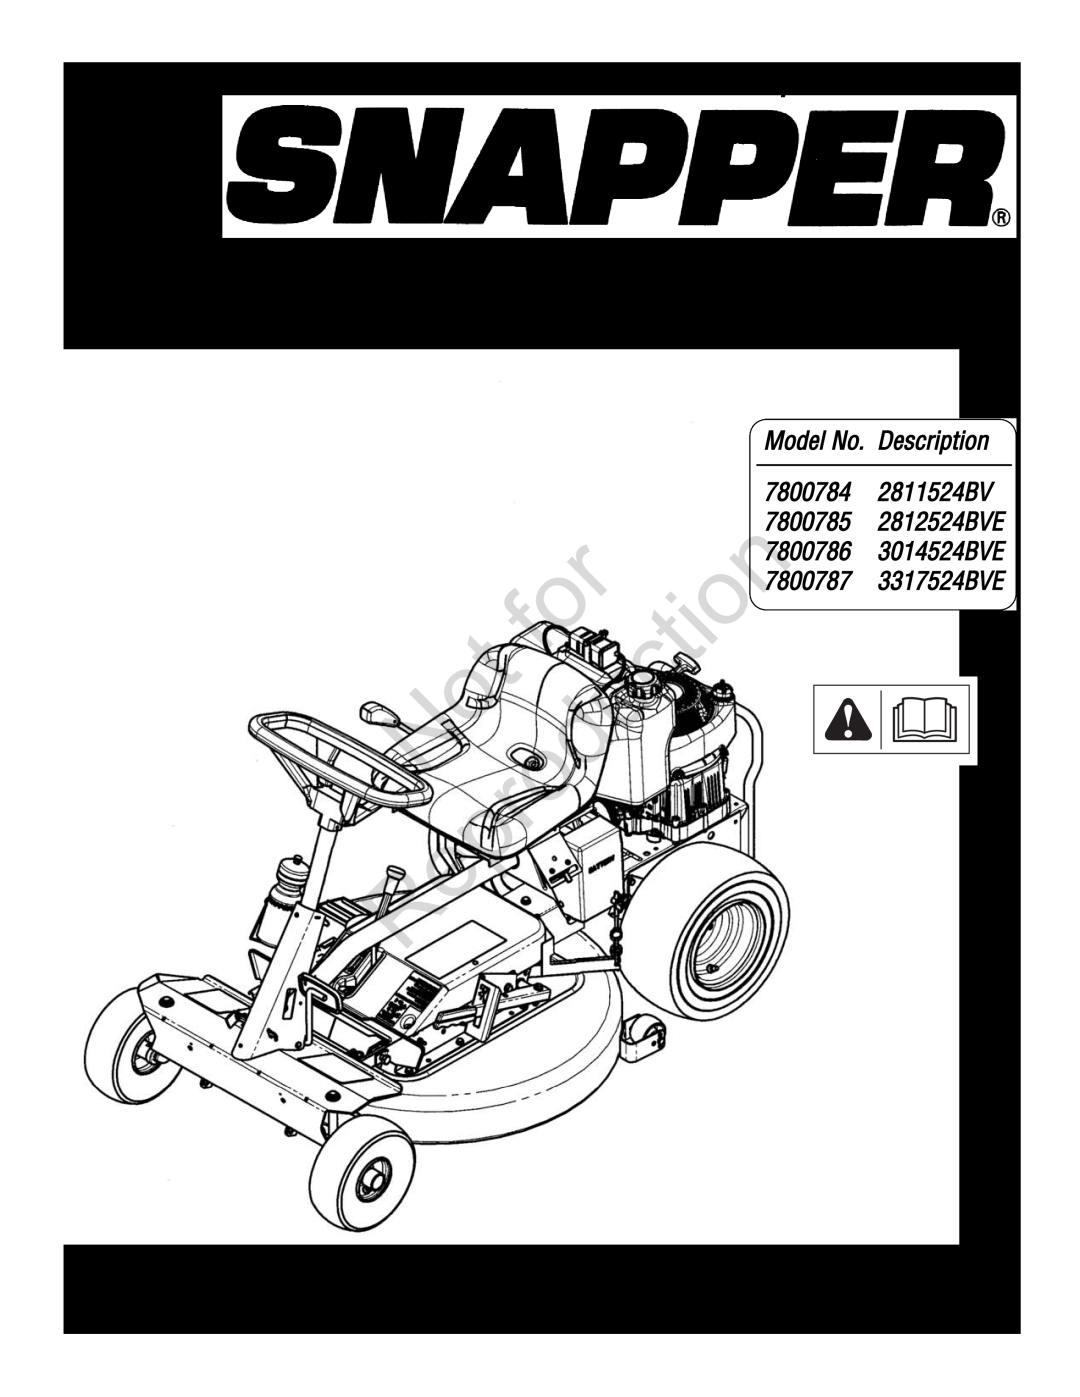 Snapper 7800784, 7800785, 7800786, 7800787 manual Reproduction, Rear Engine Riding Mower Series, Operators Manual 